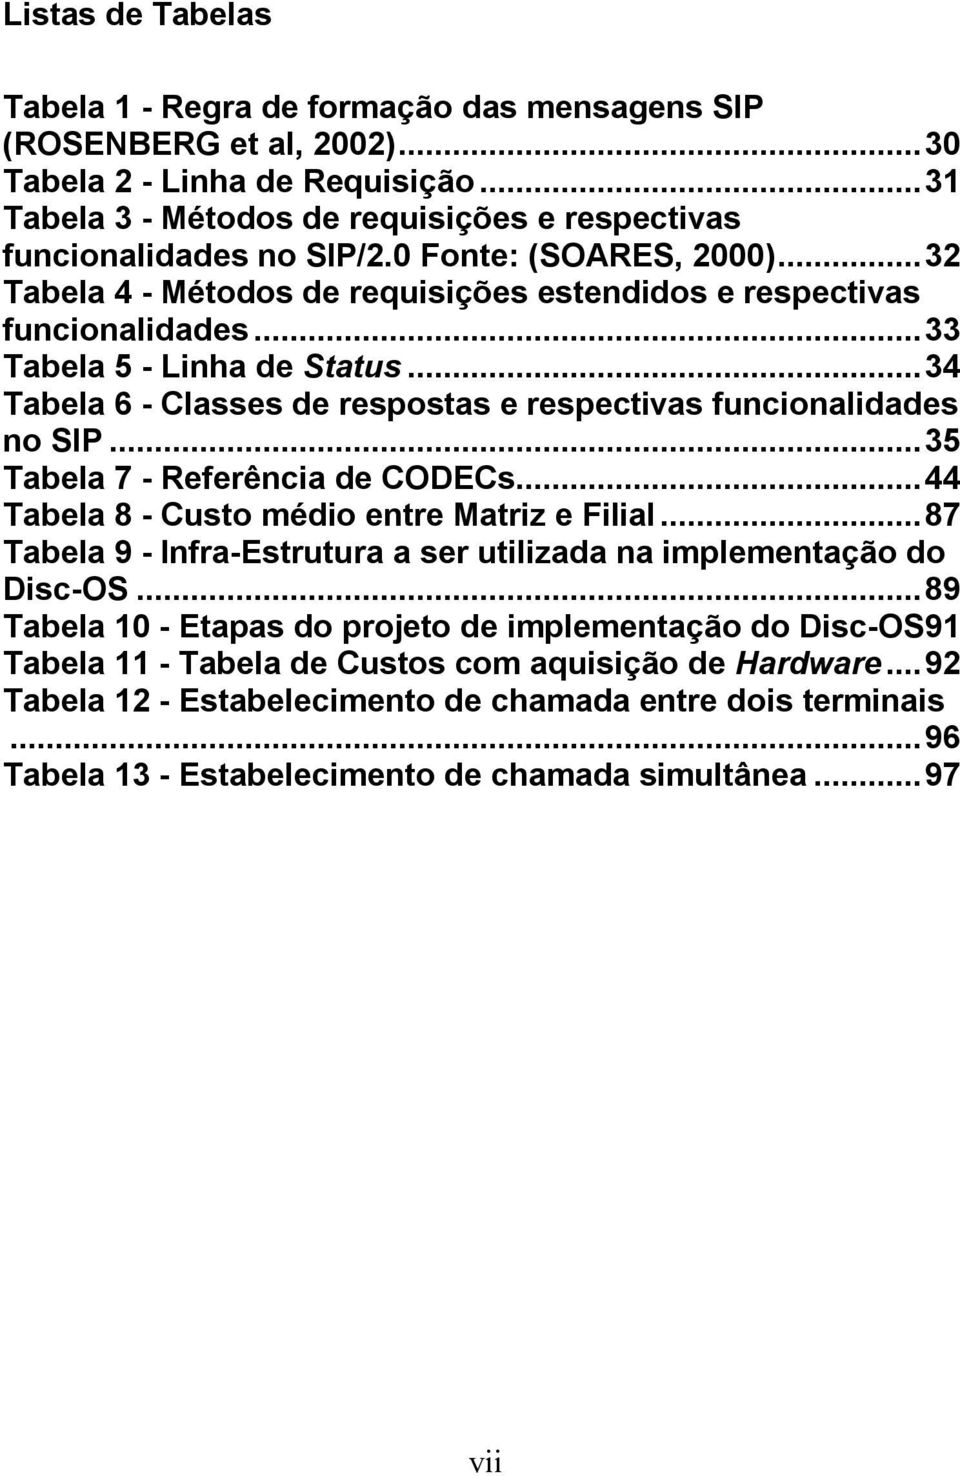 ..33 Tabela 5 - Linha de Status...34 Tabela 6 - Classes de respostas e respectivas funcionalidades no SIP...35 Tabela 7 - Referência de CODECs...44 Tabela 8 - Custo médio entre Matriz e Filial.